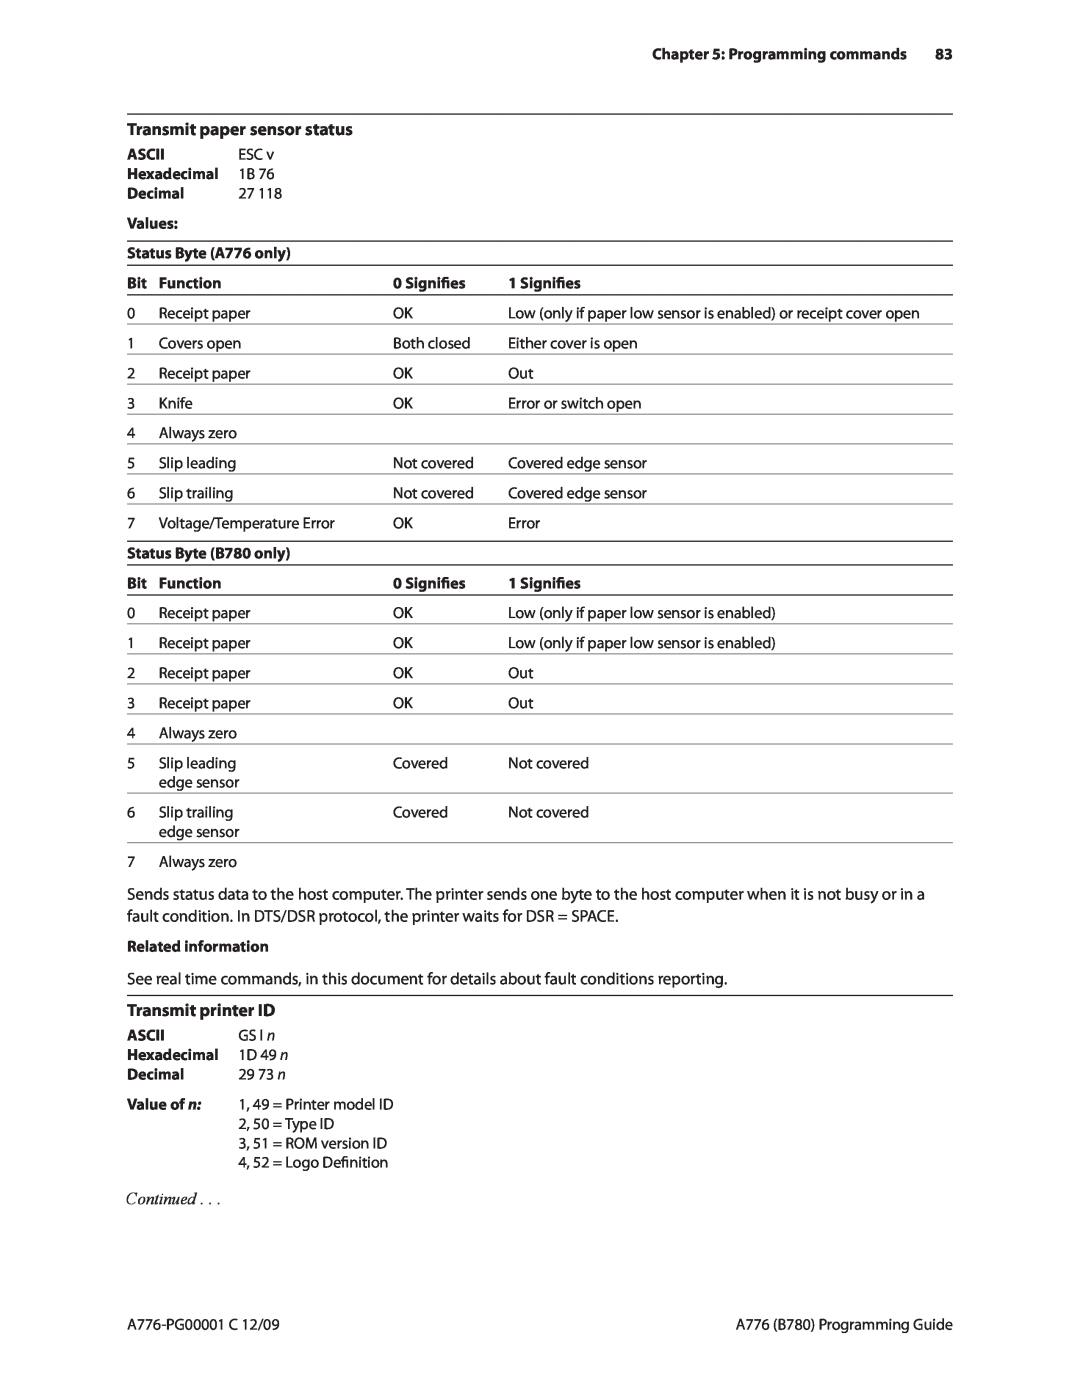 Cognitive Solutions A776, B780 manual Transmit paper sensor status, Transmit printer ID, Continued 